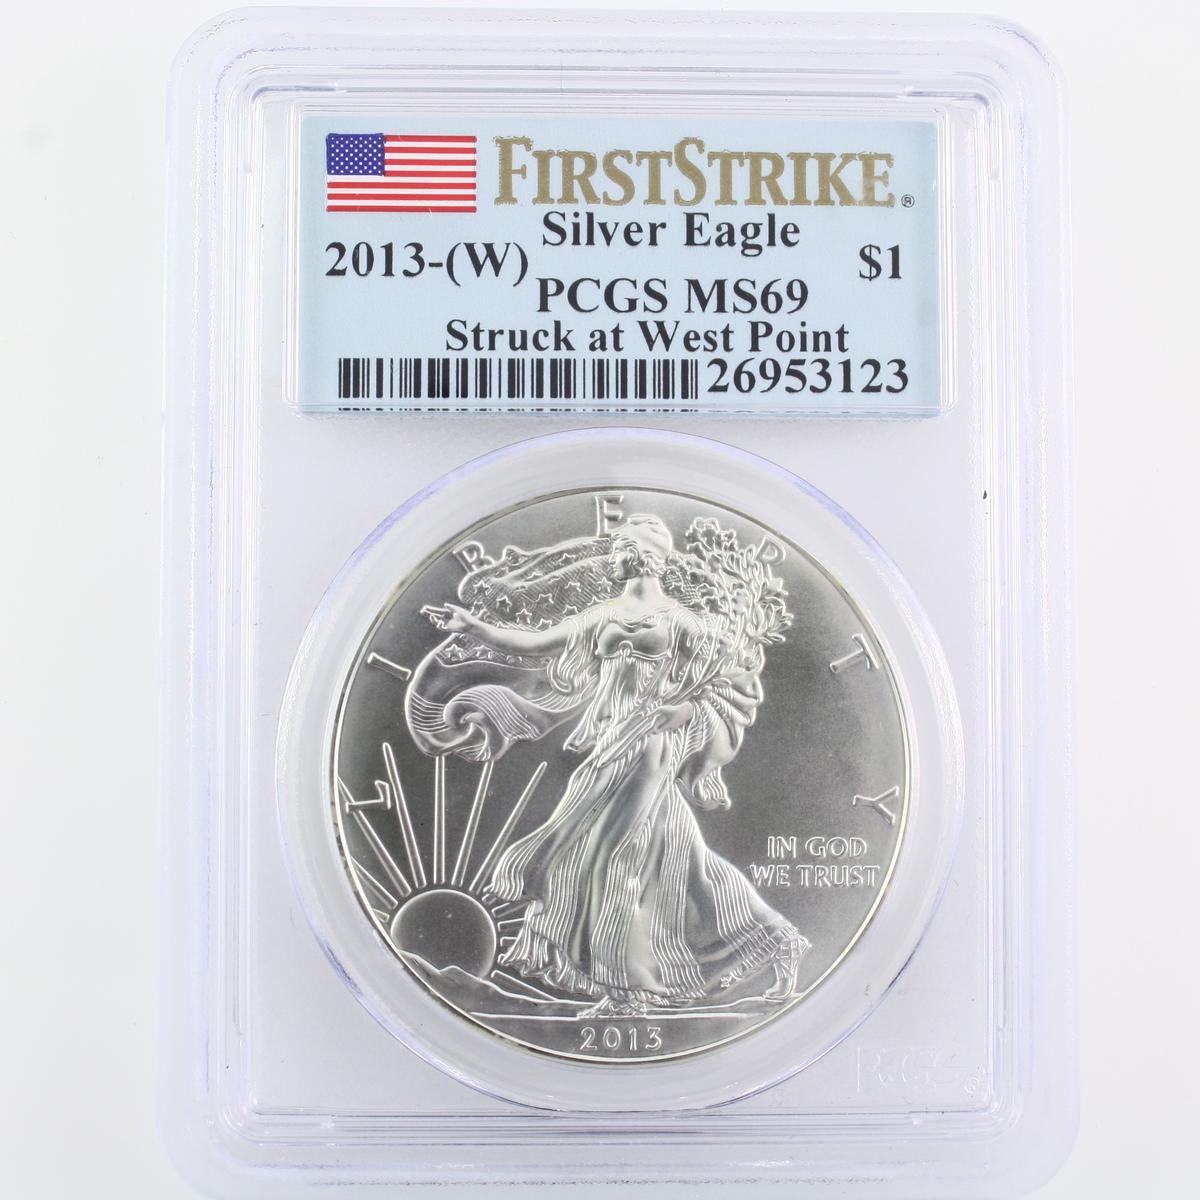 Certified 2013-(W) U.S. American Eagle silver dollar